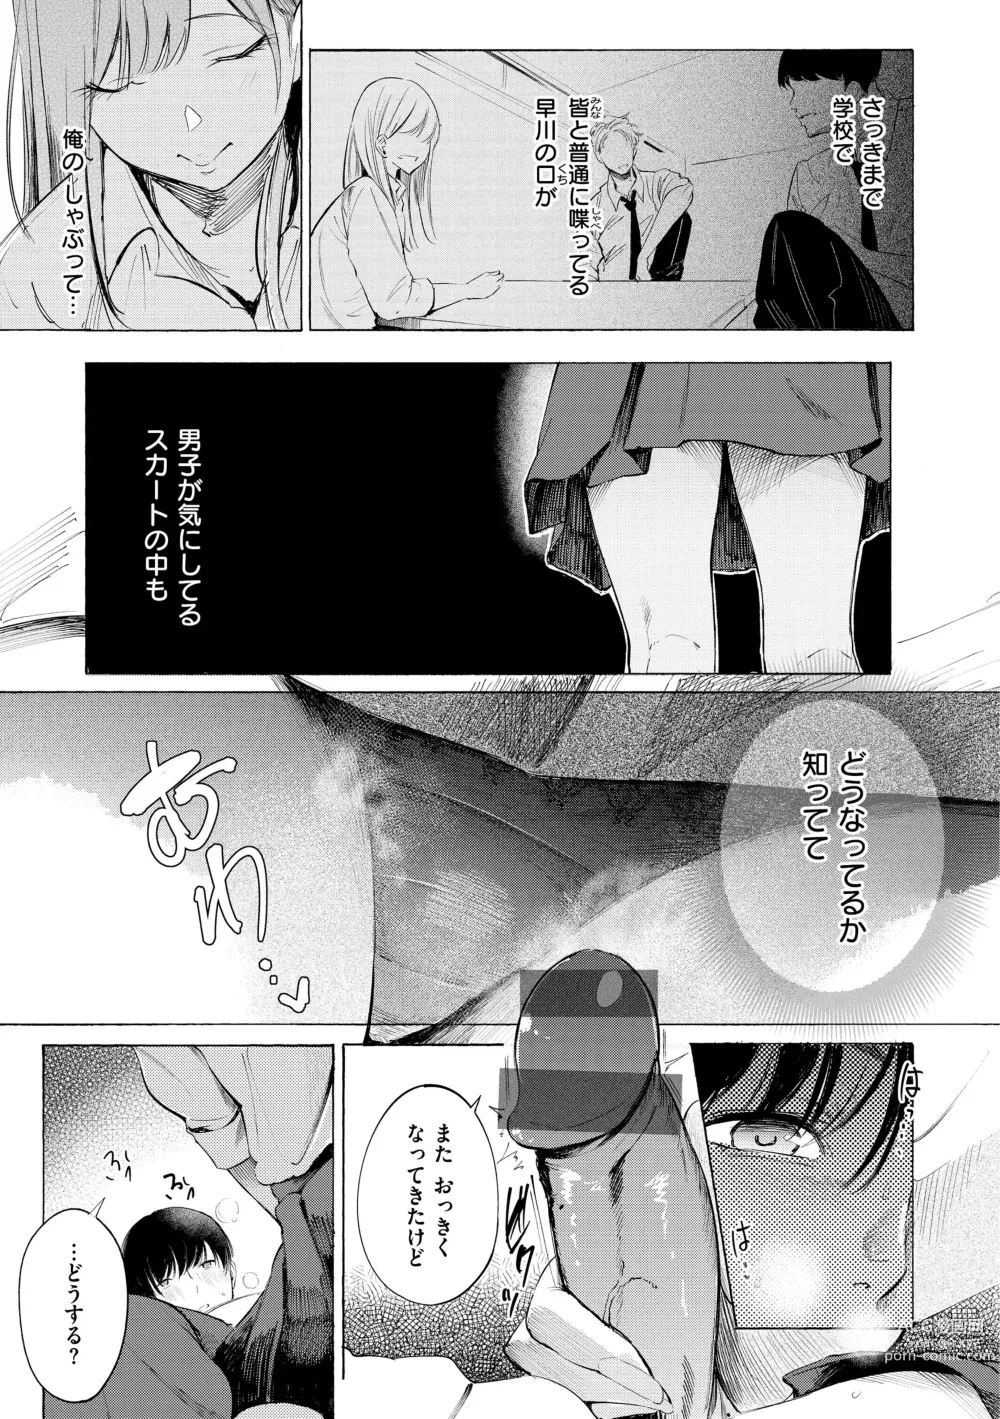 Page 183 of manga Frustration Girls - Mura Mura Girls ready for you!!